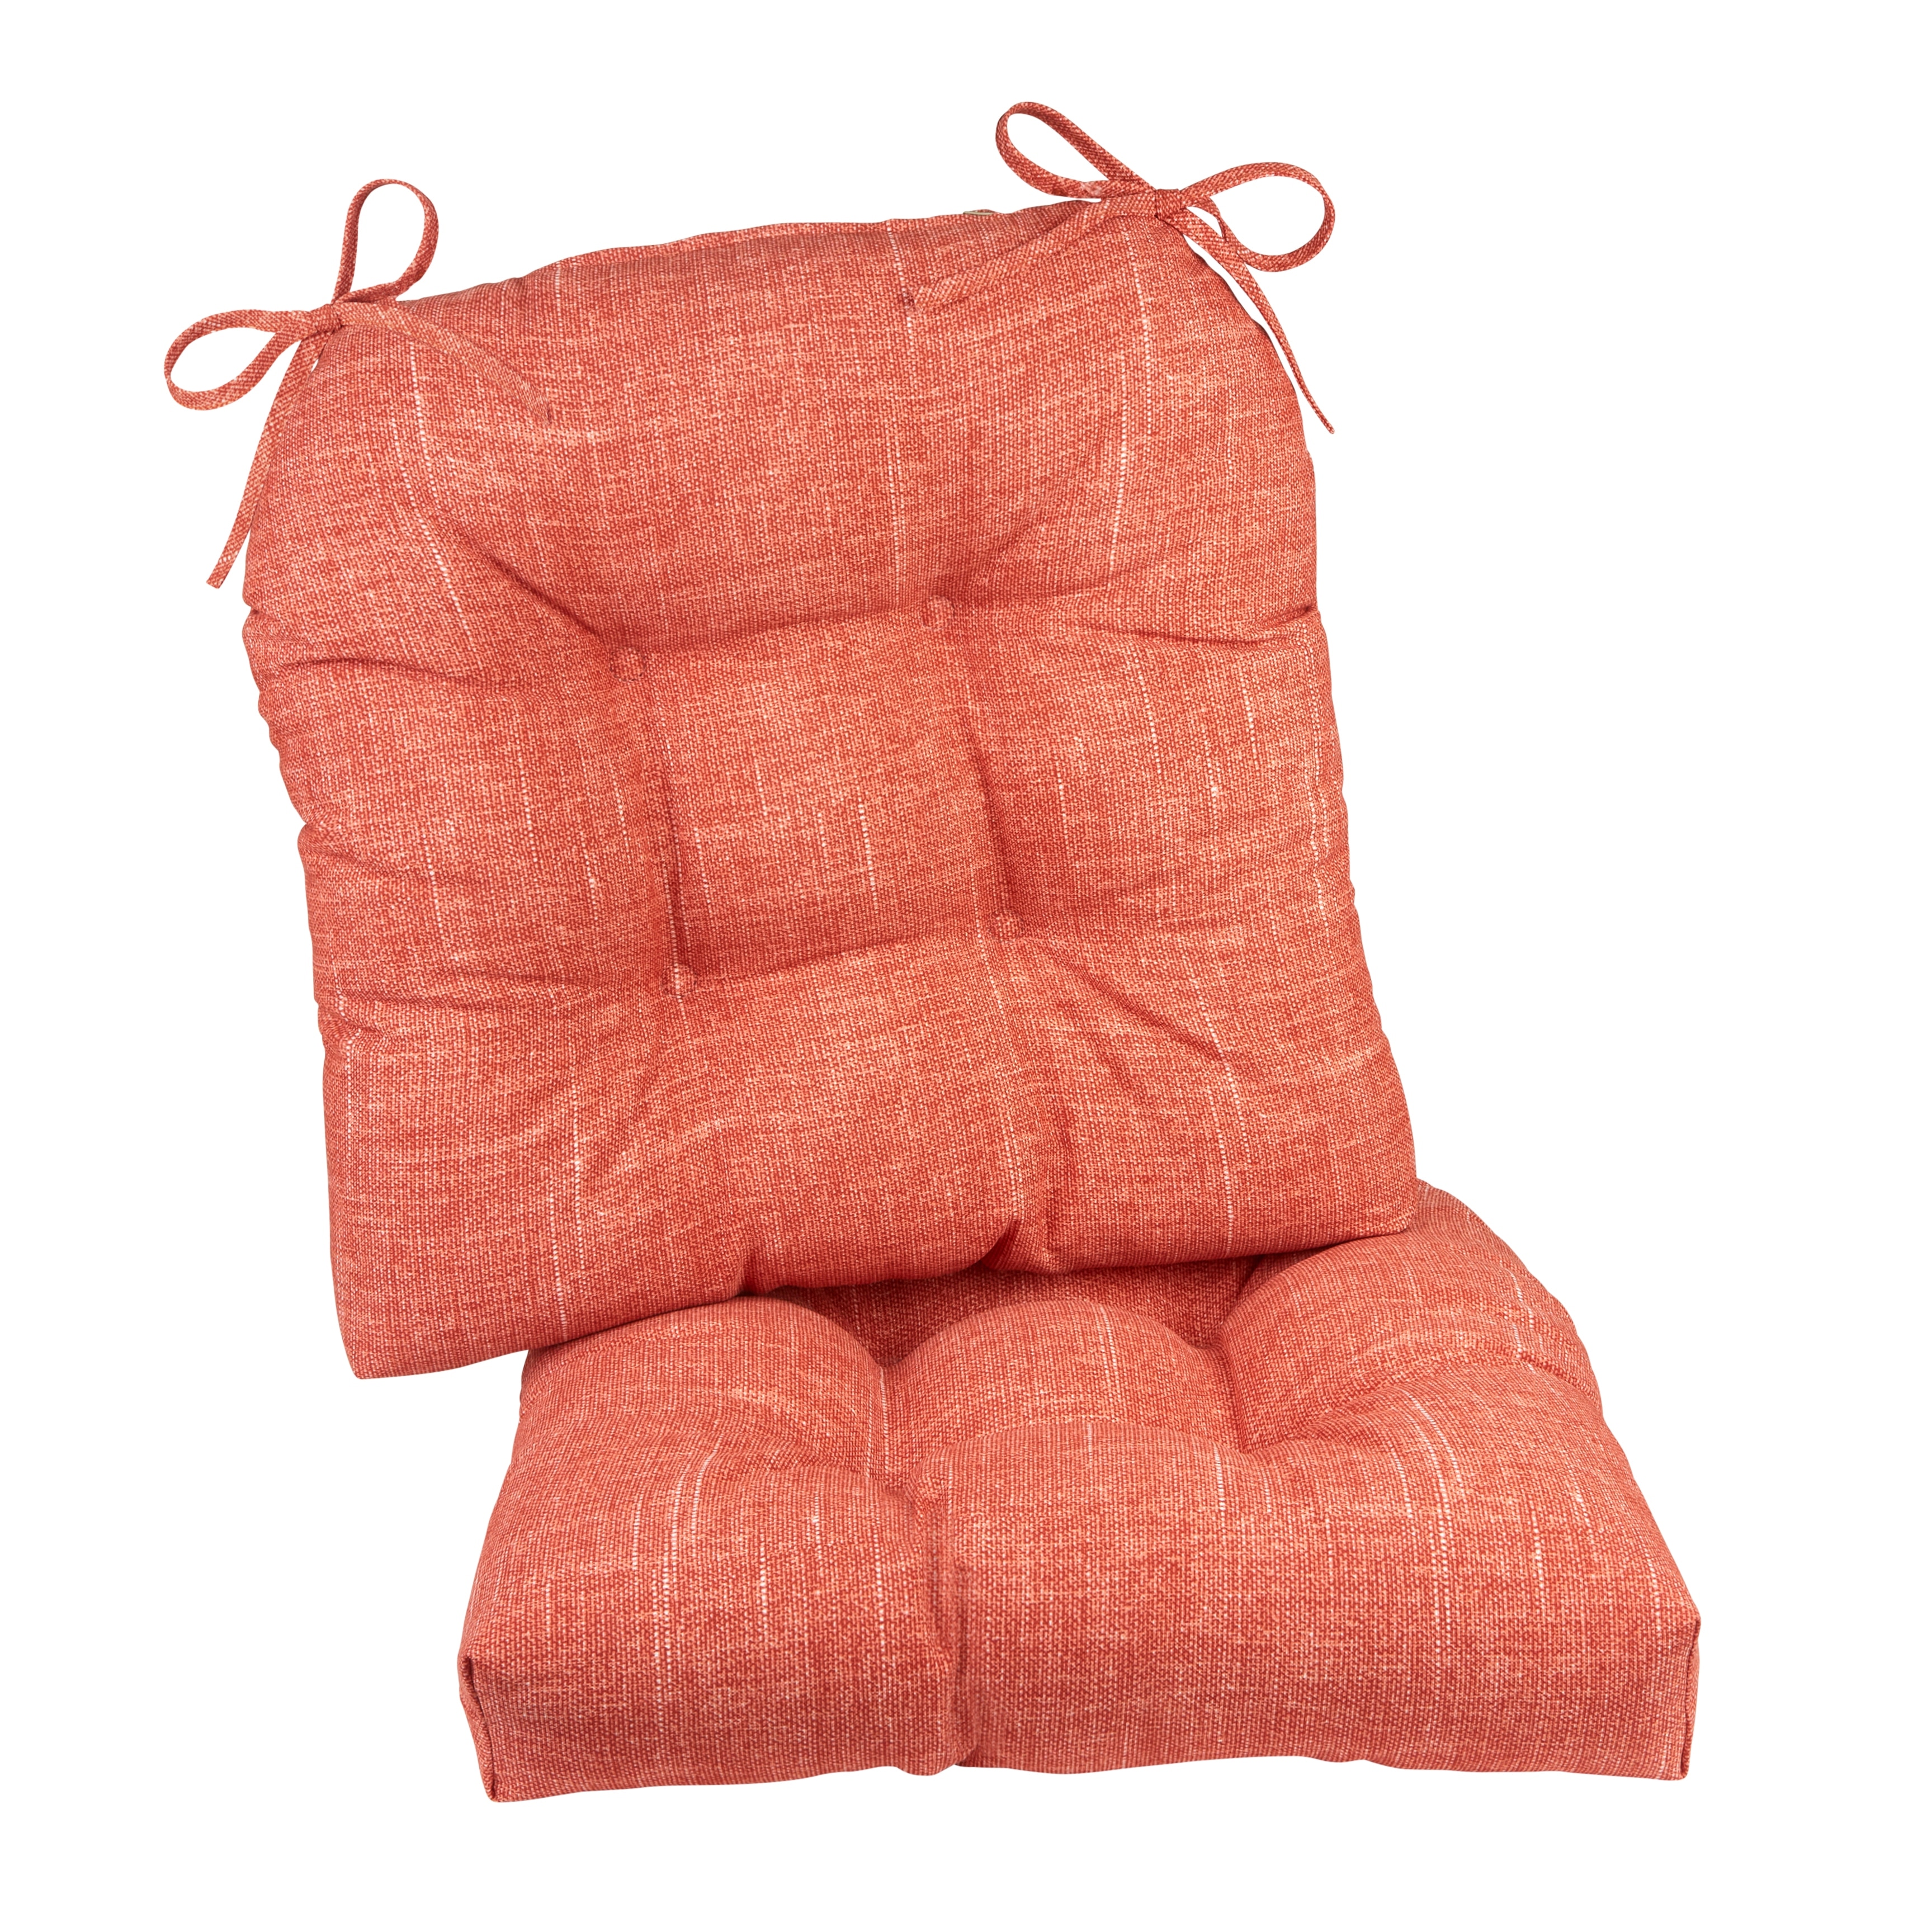 Gripper Jumbo Omega Rocking Chair Cushion Seat and Back Cushion Set - Teal